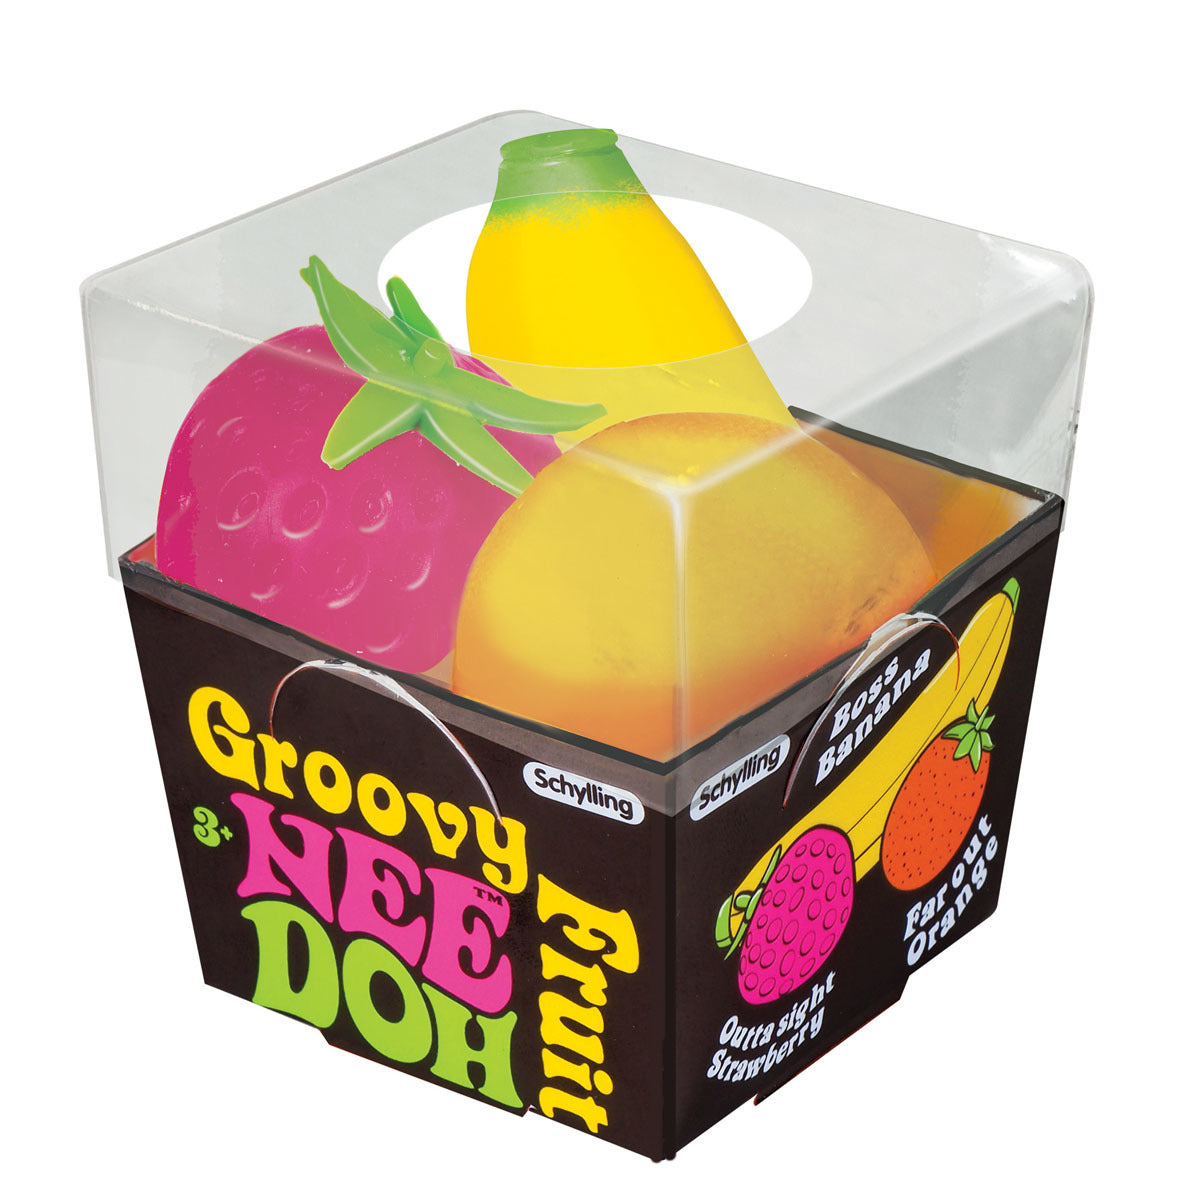 The Groovy Glob: Nee Doh - Groovy Fruits Fidget Toy (Styles Vary)